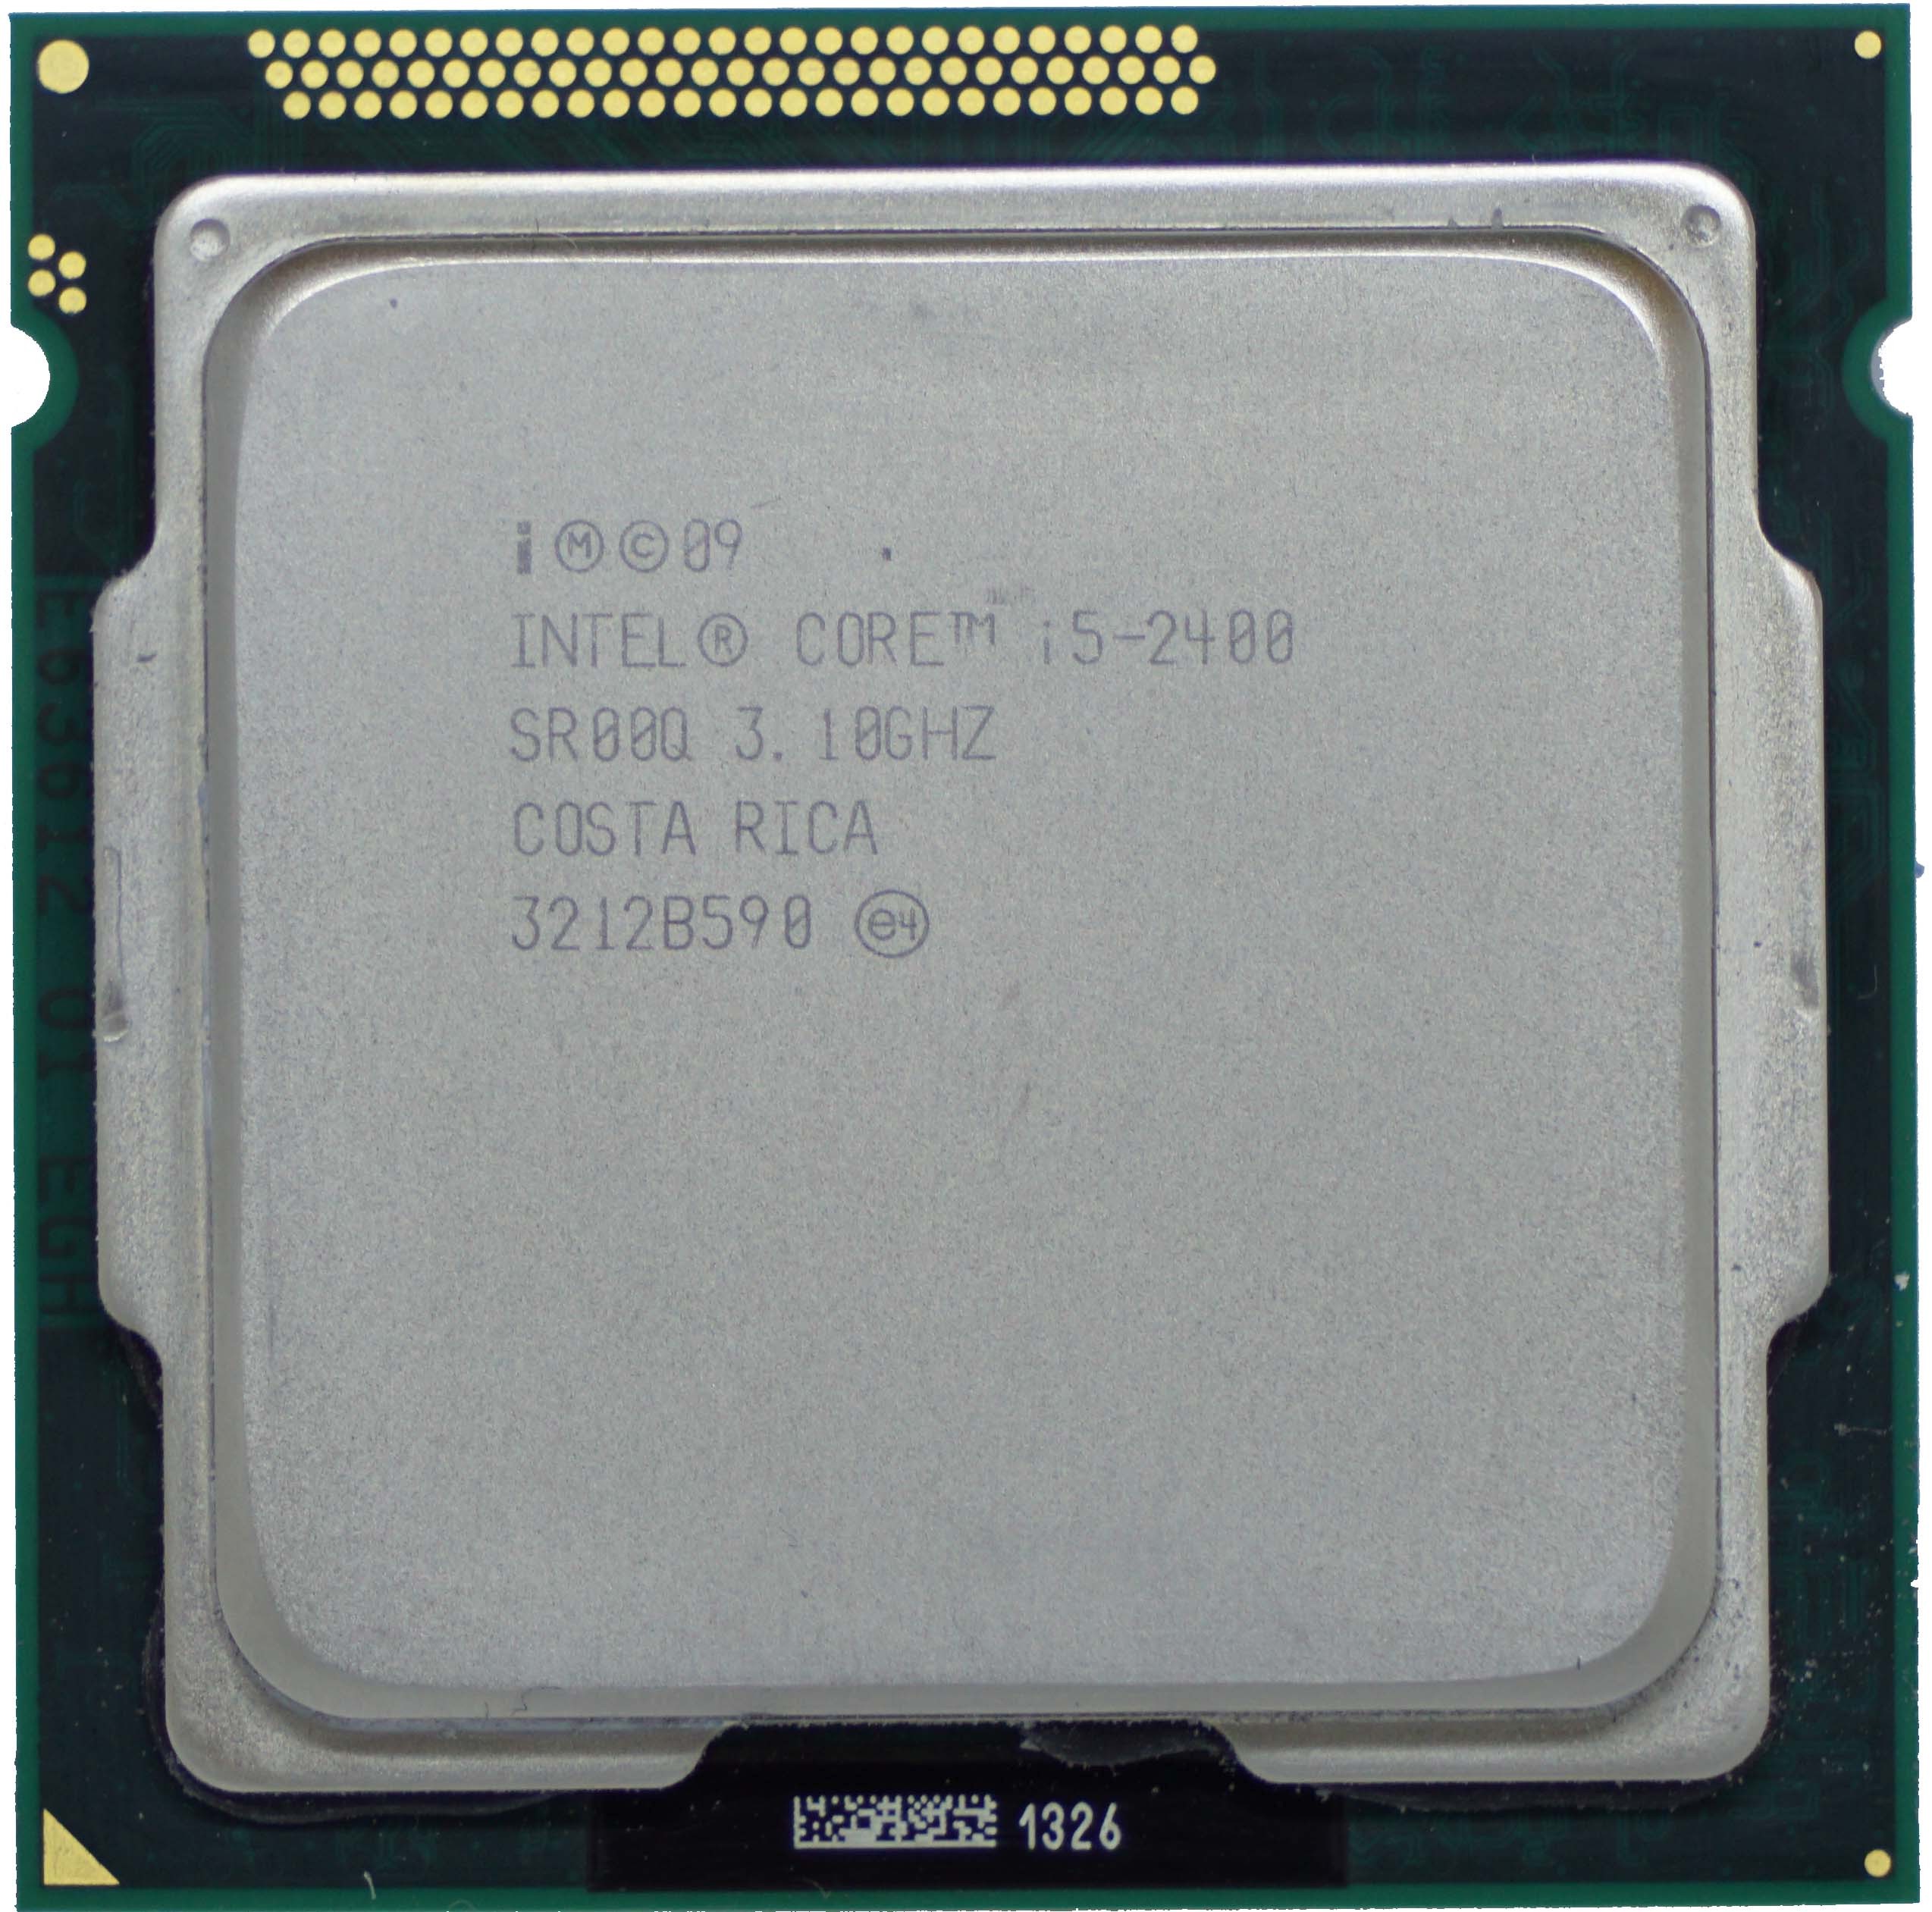 Intel Core i5-2400 (SR00Q) 3.10Ghz Quad (4) Core LGA1155 95W CPU